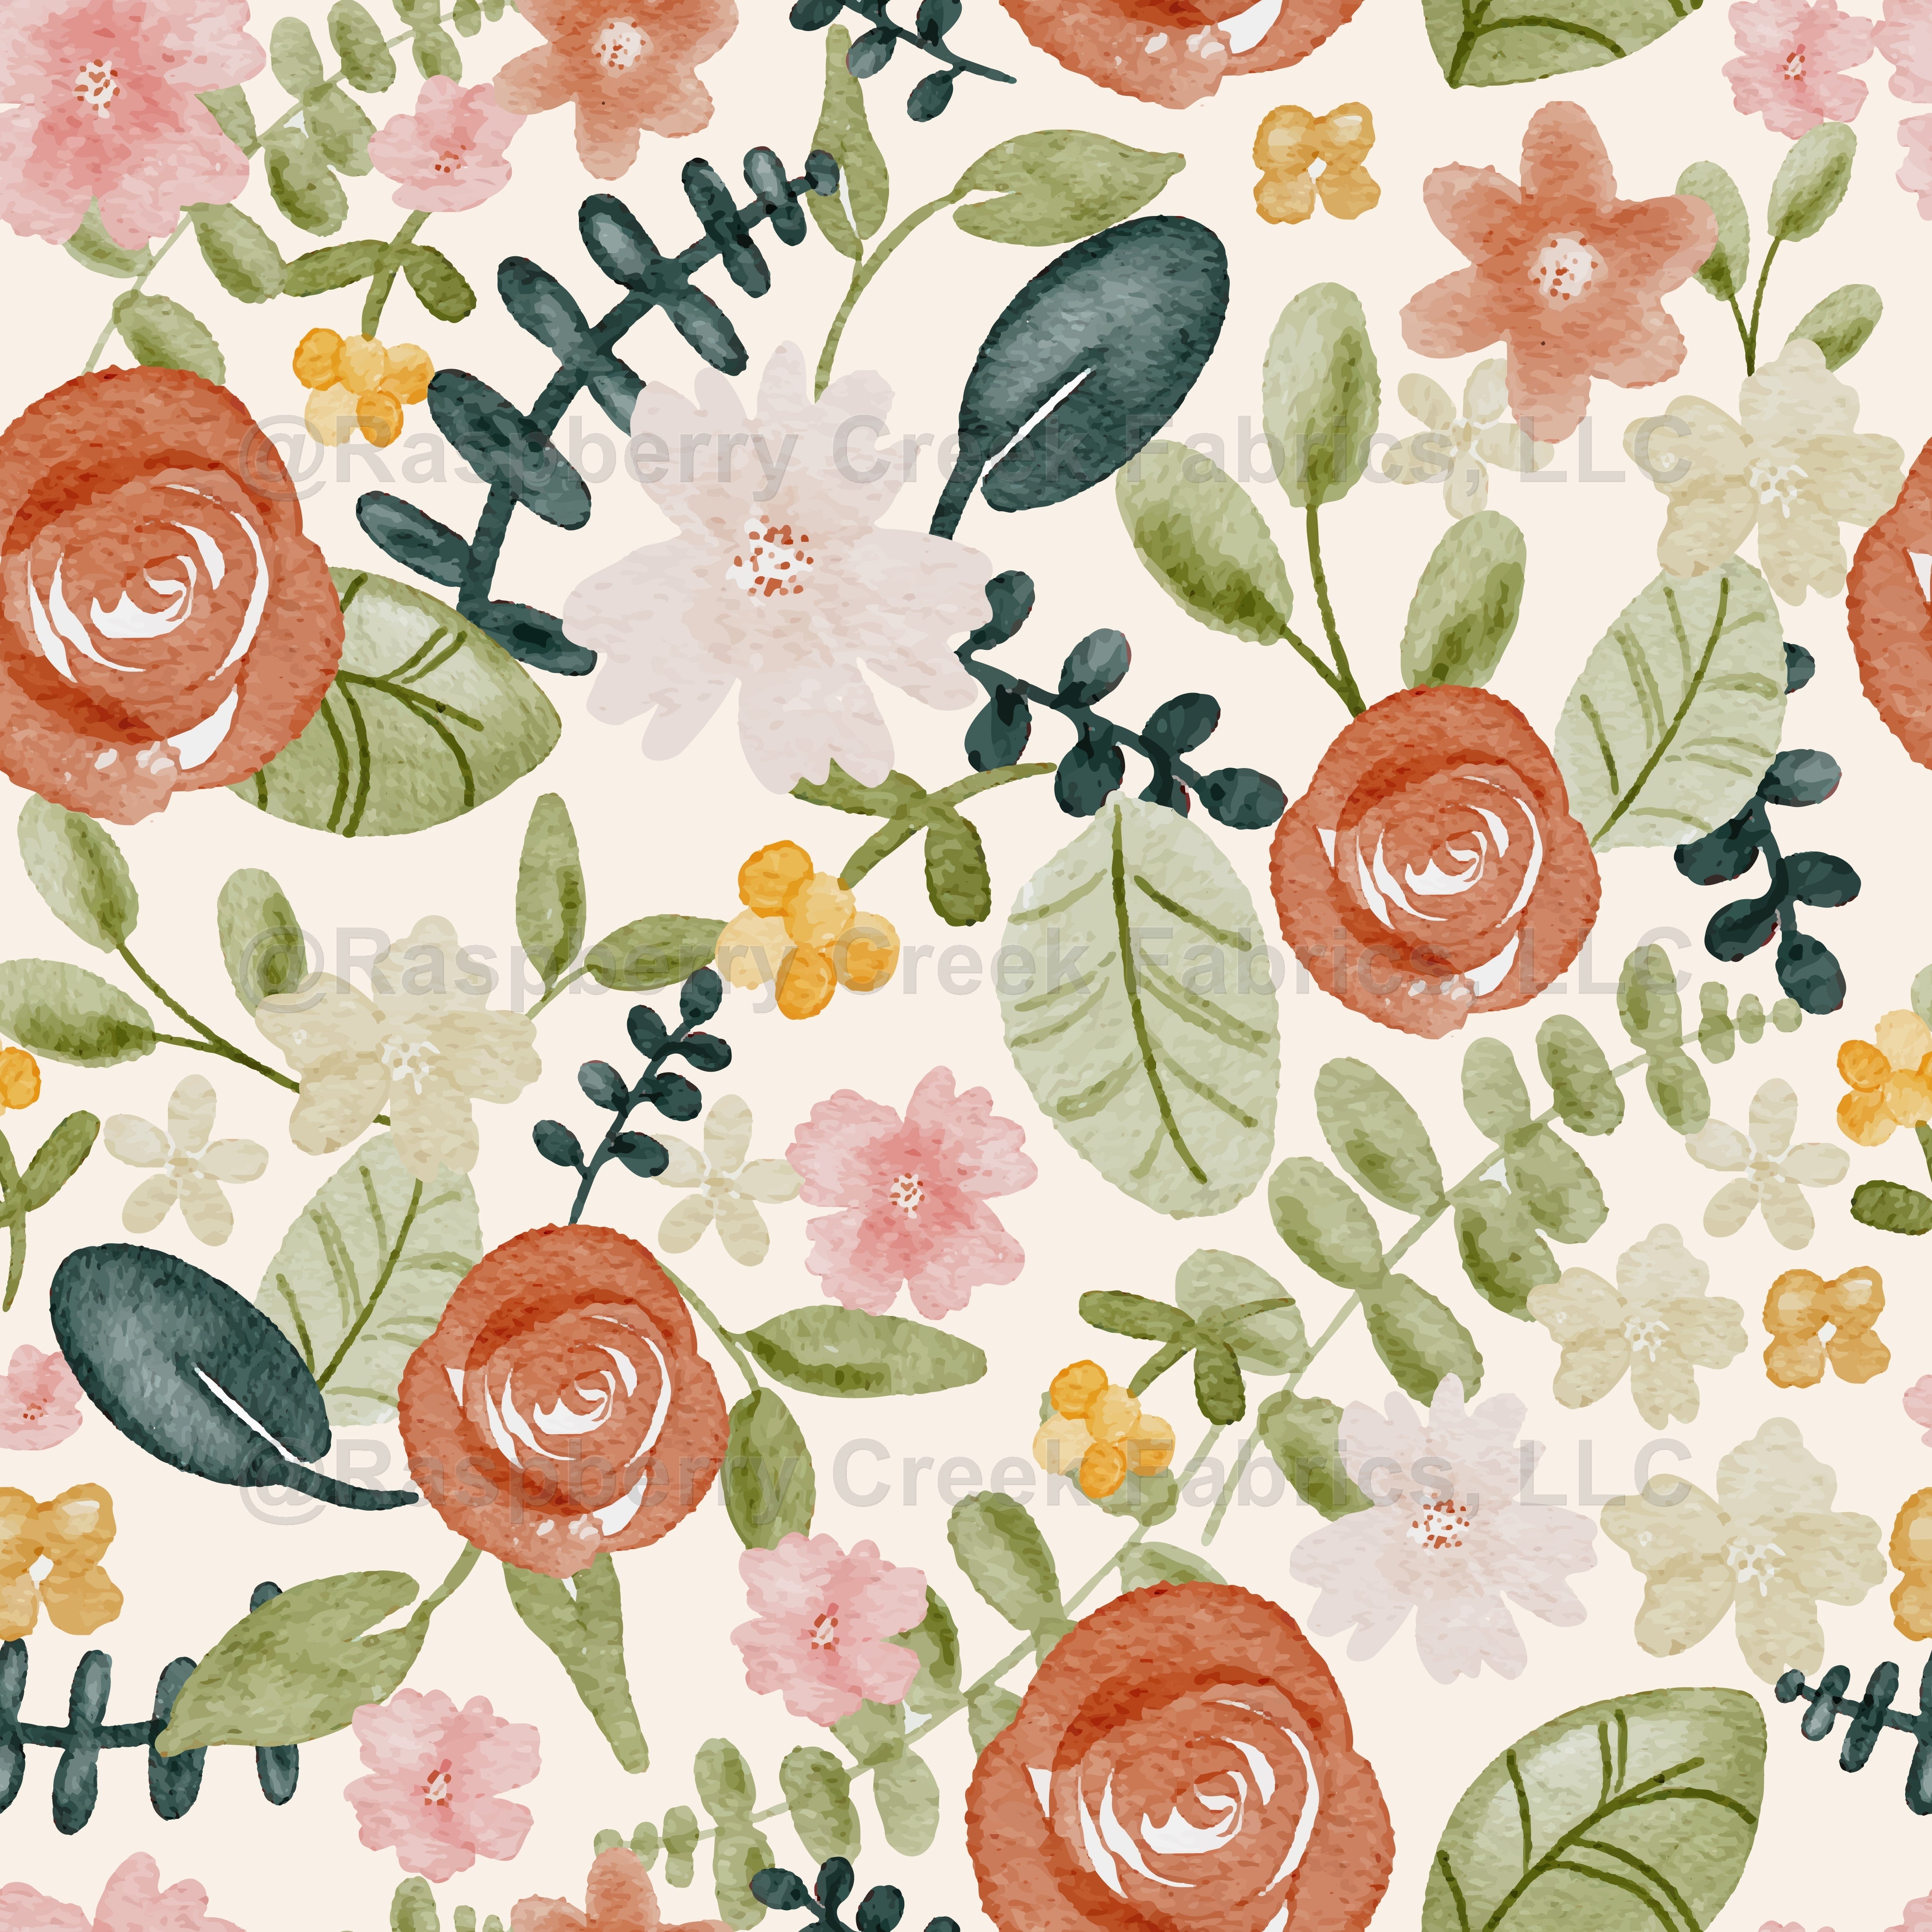 Floral Blender - Lemonade Collection Fabric, Raspberry Creek Fabrics, watermarked